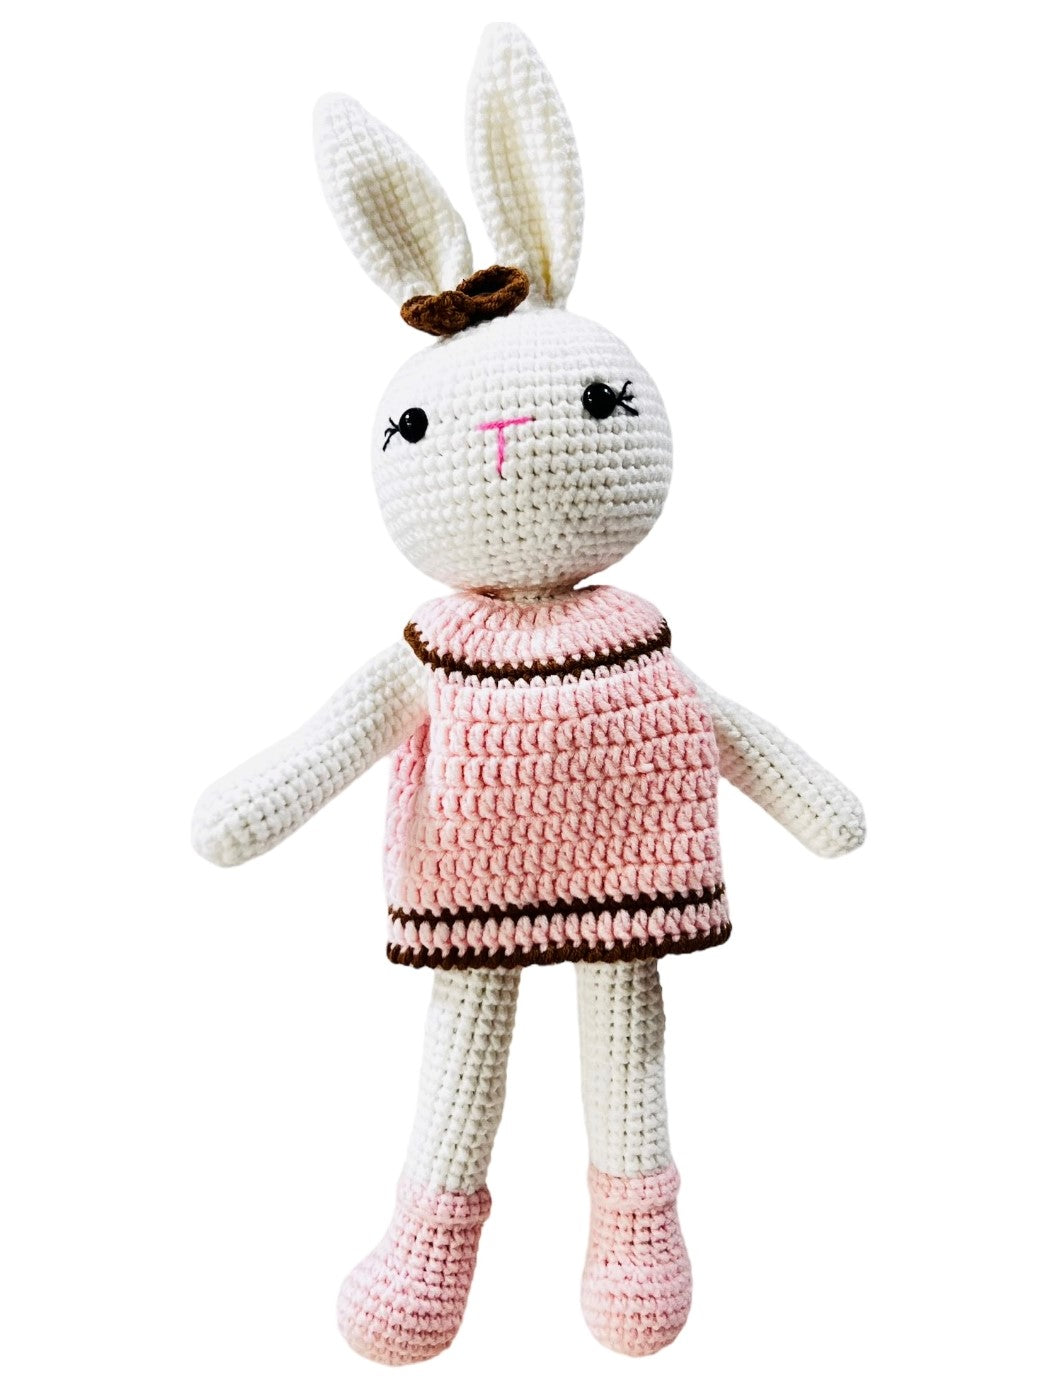 Crocheted Animal Doll - Baby, the Bunny